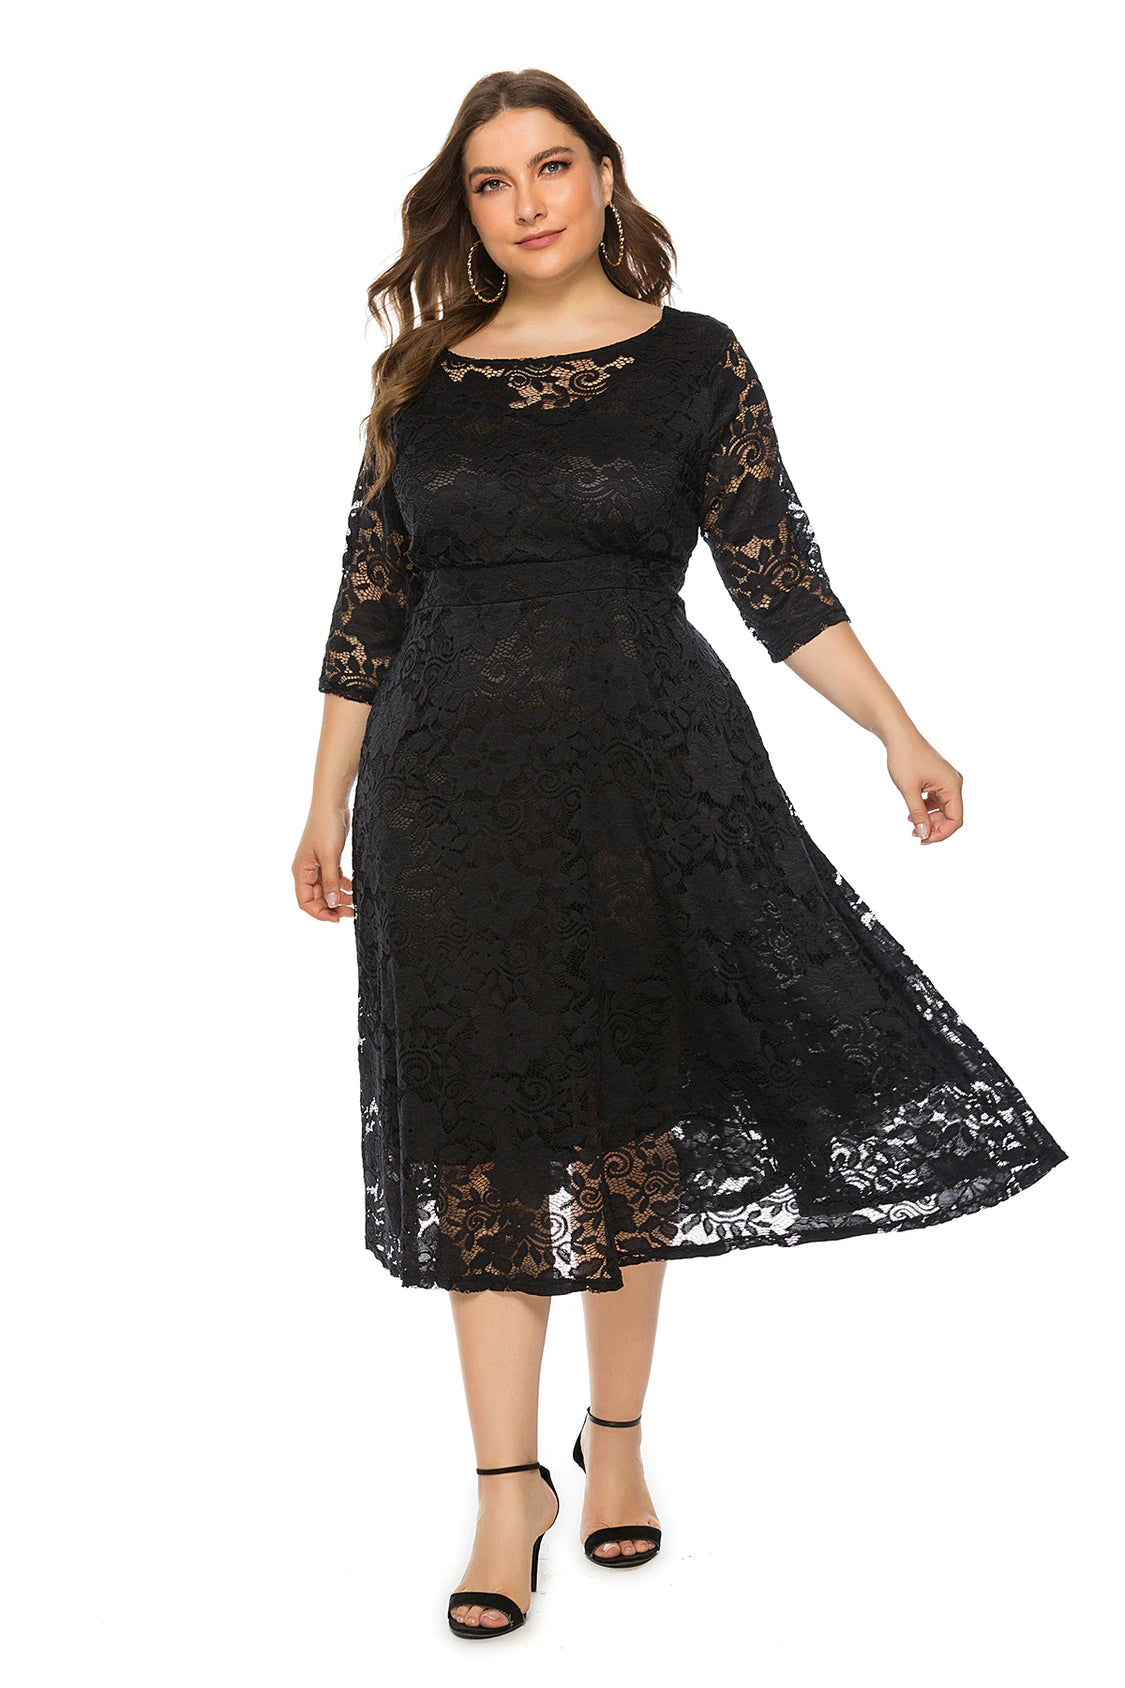 Large size evening dress mid-length dress hollow lace pocket dress